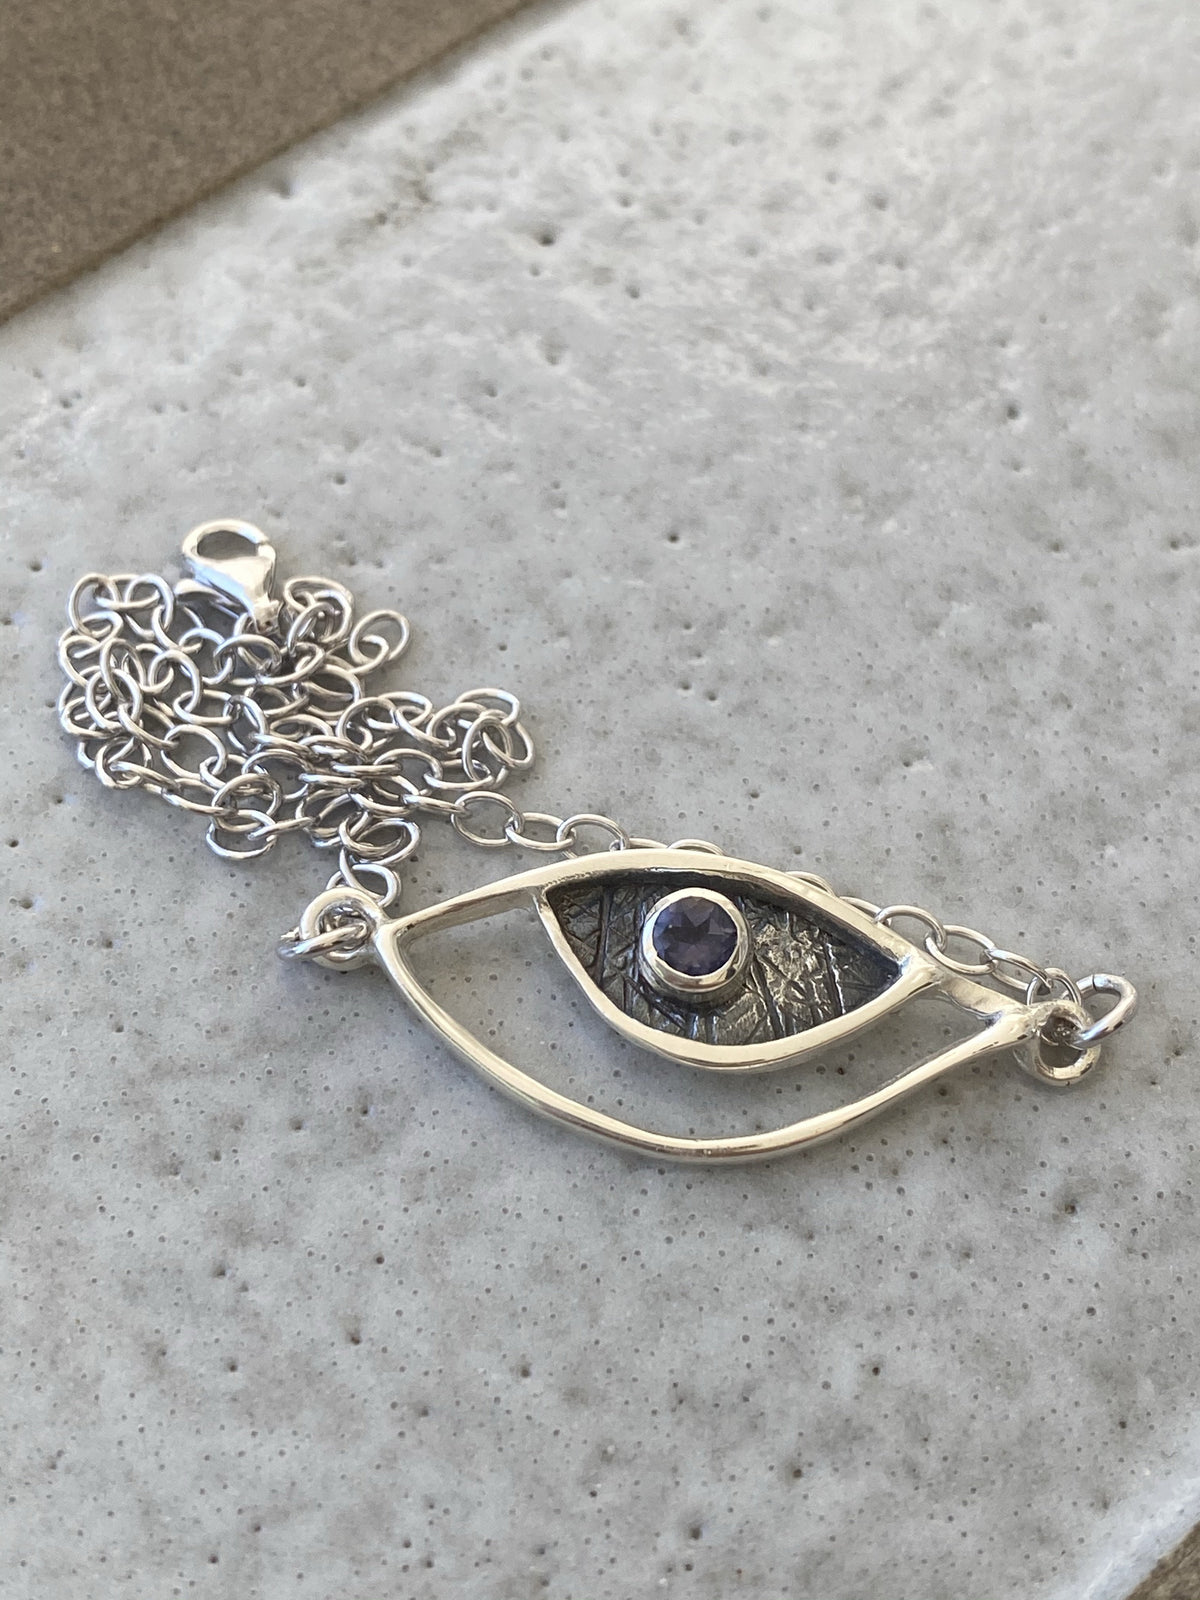 eye bracelet, silver eye bracelet with blue iolite stone, evil eye bracelet 